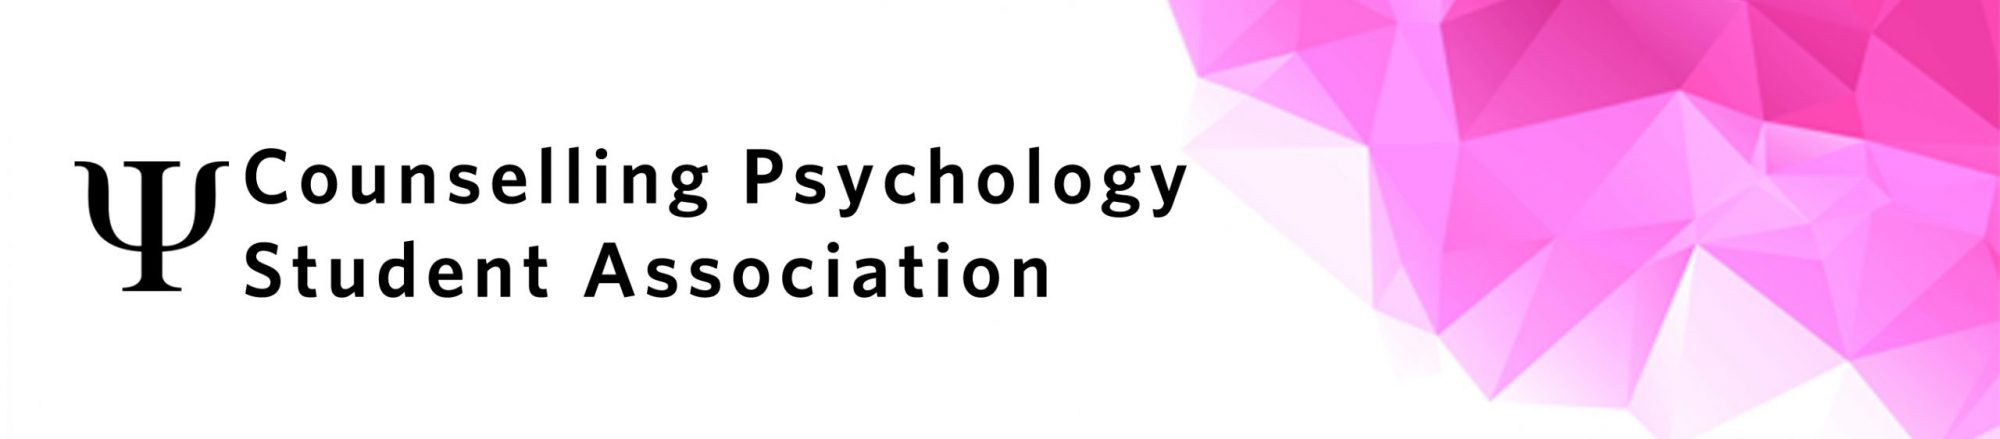 UBC Counselling Psychology Student Association